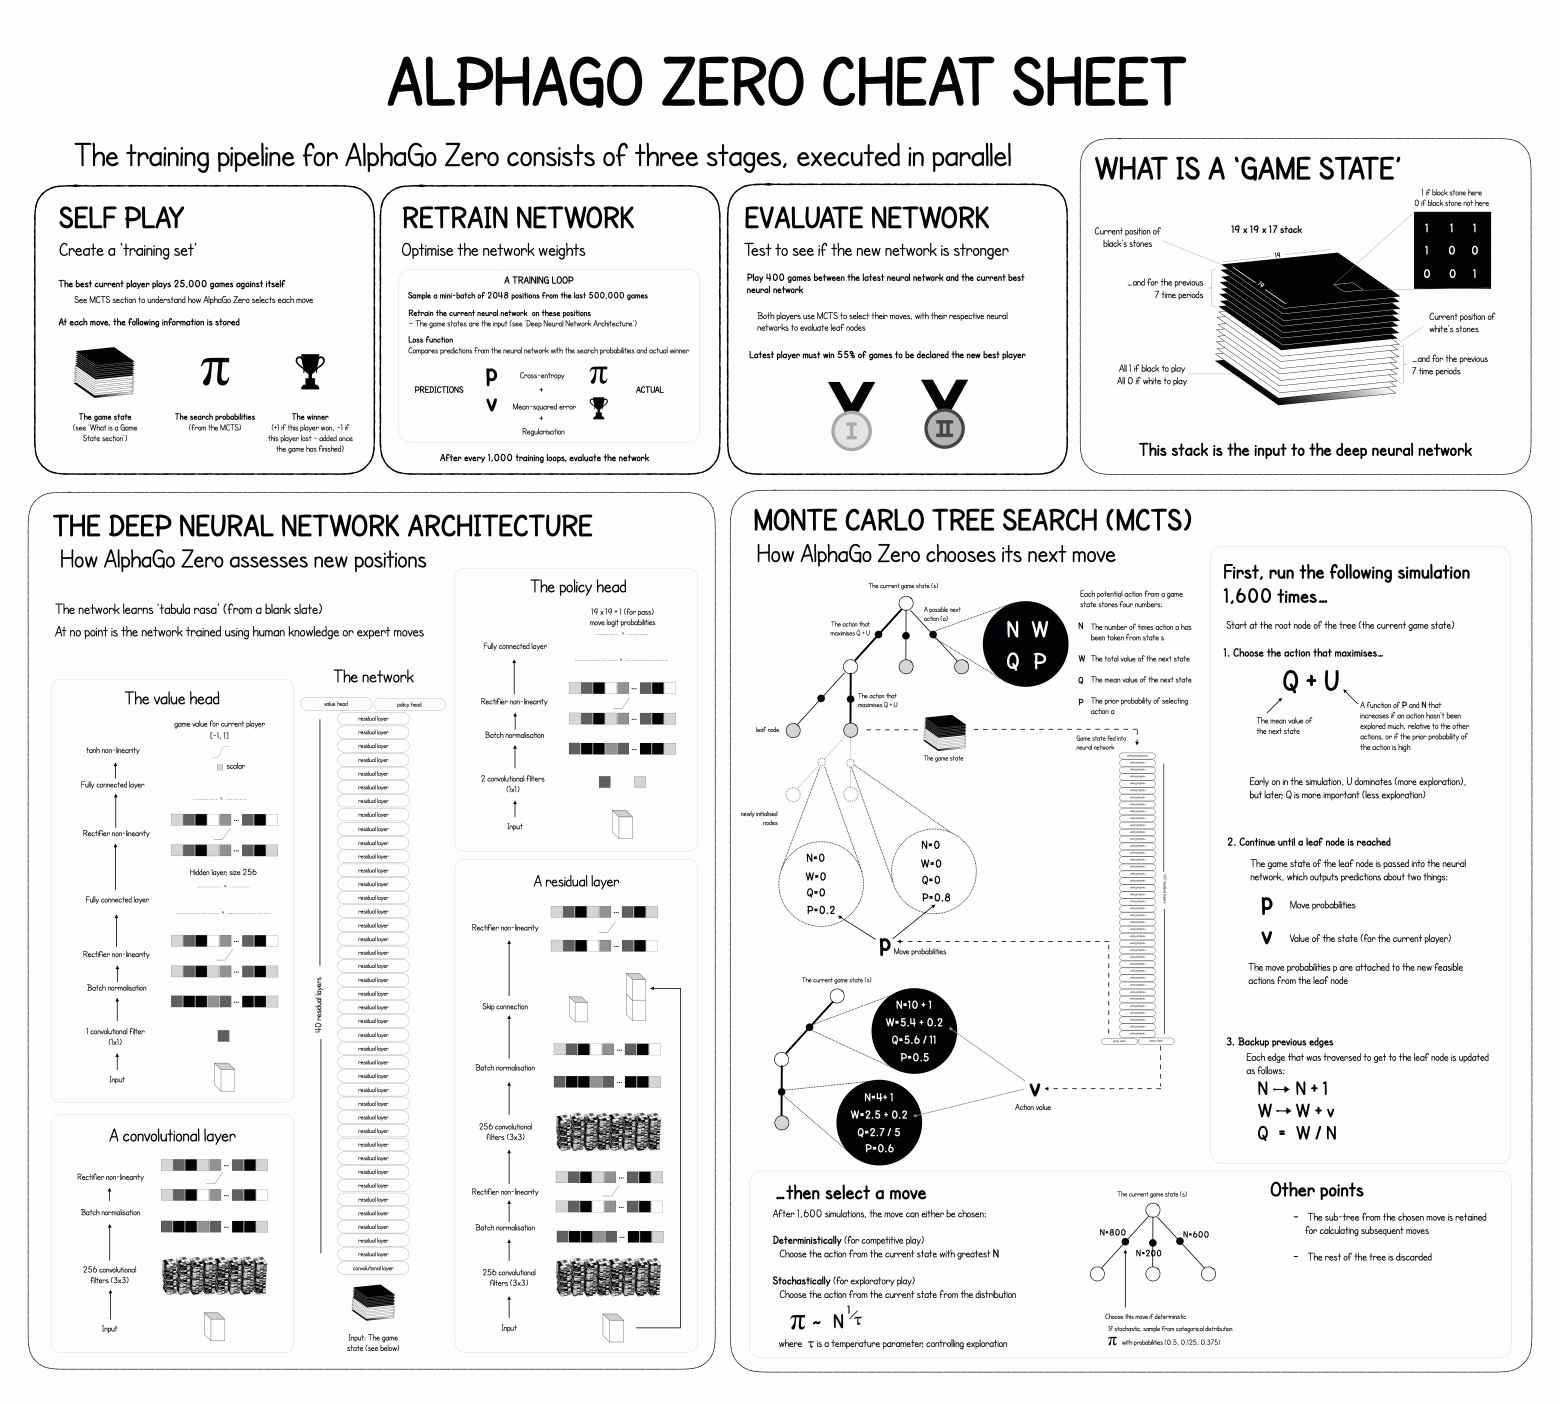 https://medium.com/applied-data-science/alphago-zero-explained-in-one-diagram-365f5abf67e0